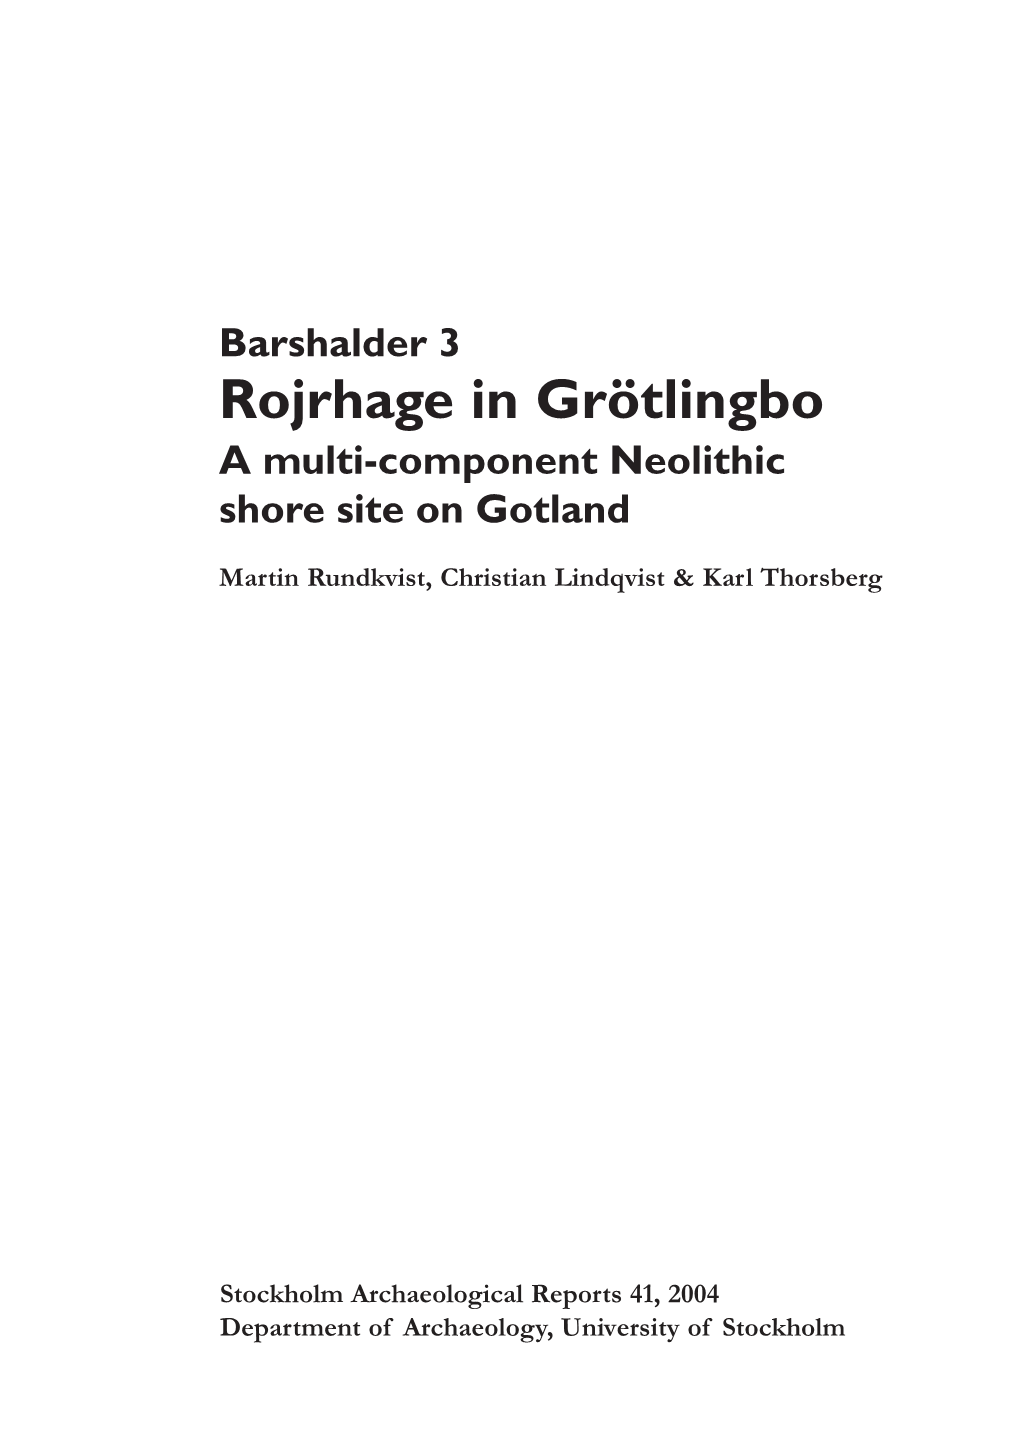 Barshalder 3 Rojrhage in Grötlingbo a Multi-Component Neolithic Shore Site on Gotland